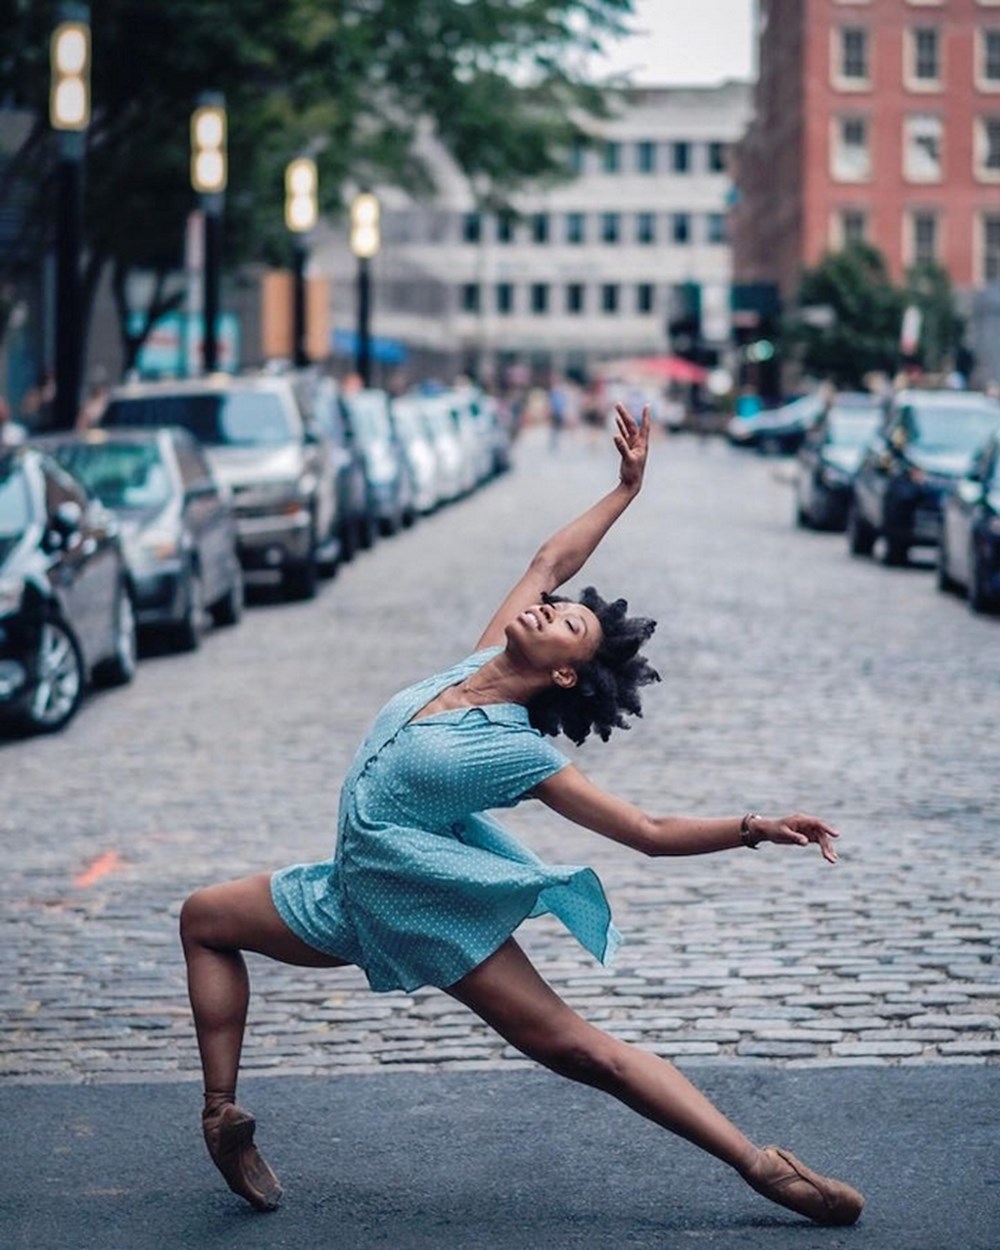 Молодая женщина танцует. Фотограф Омар Роблес балет. Танцоры балета на улицах Нью-Йорка фотограф Omar z Robles. Танцы на улице. Балерина в городе.